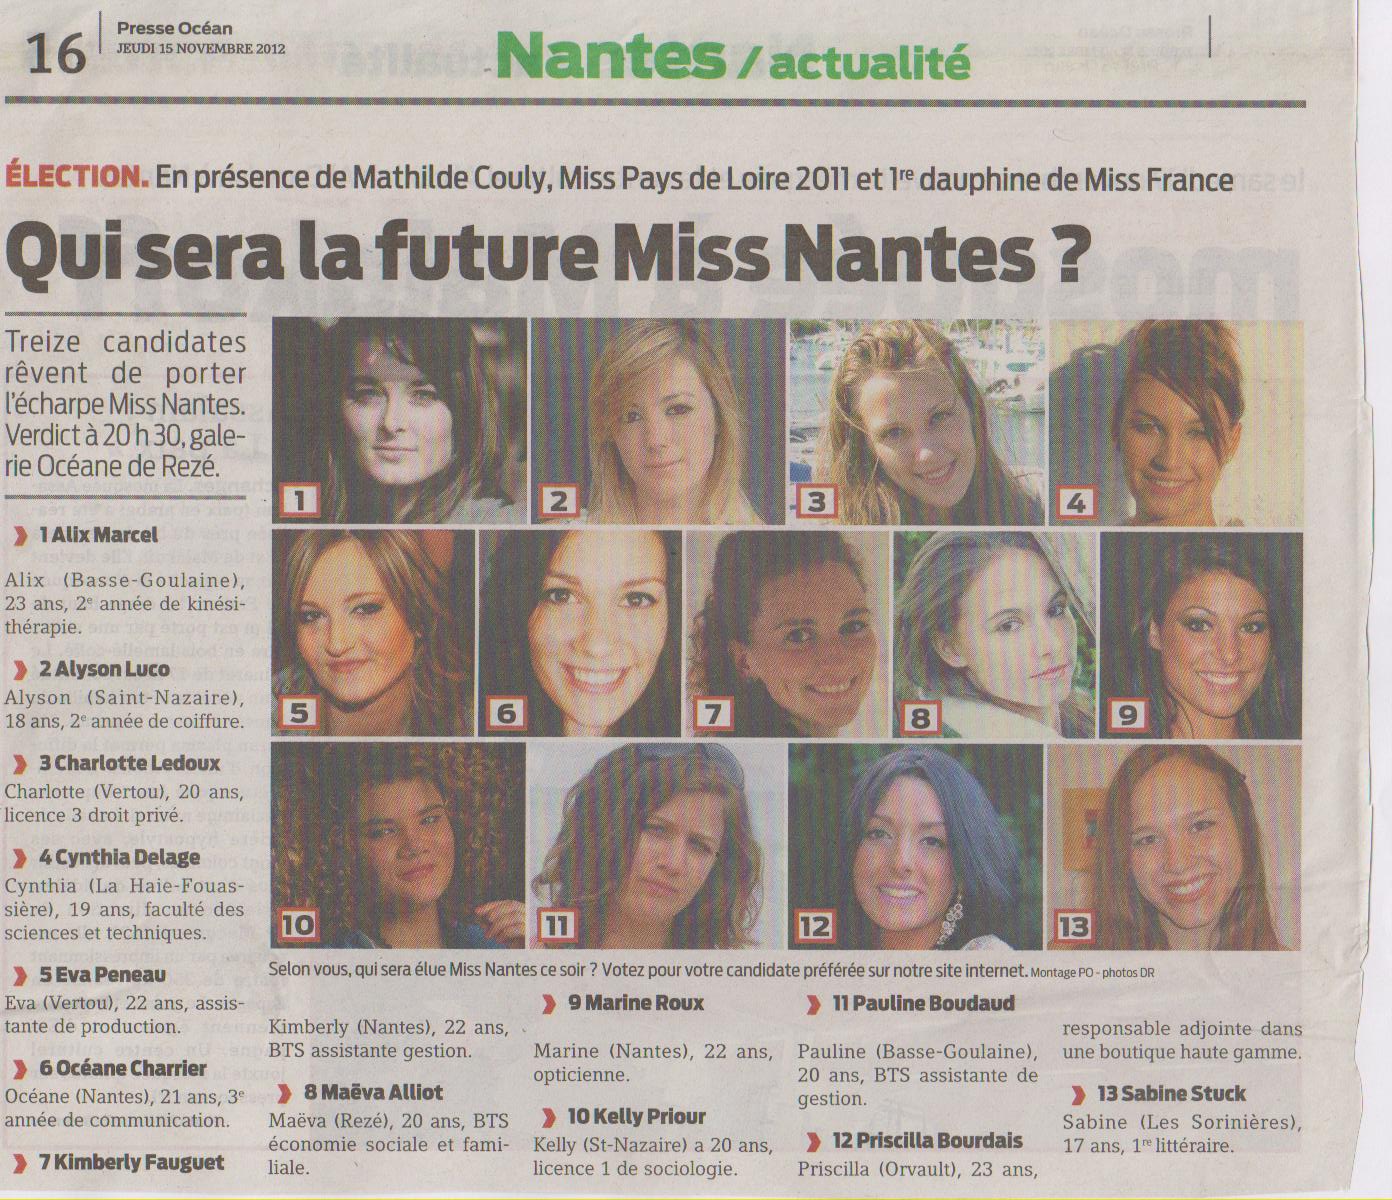 15-11-12 Future Miss Nantes